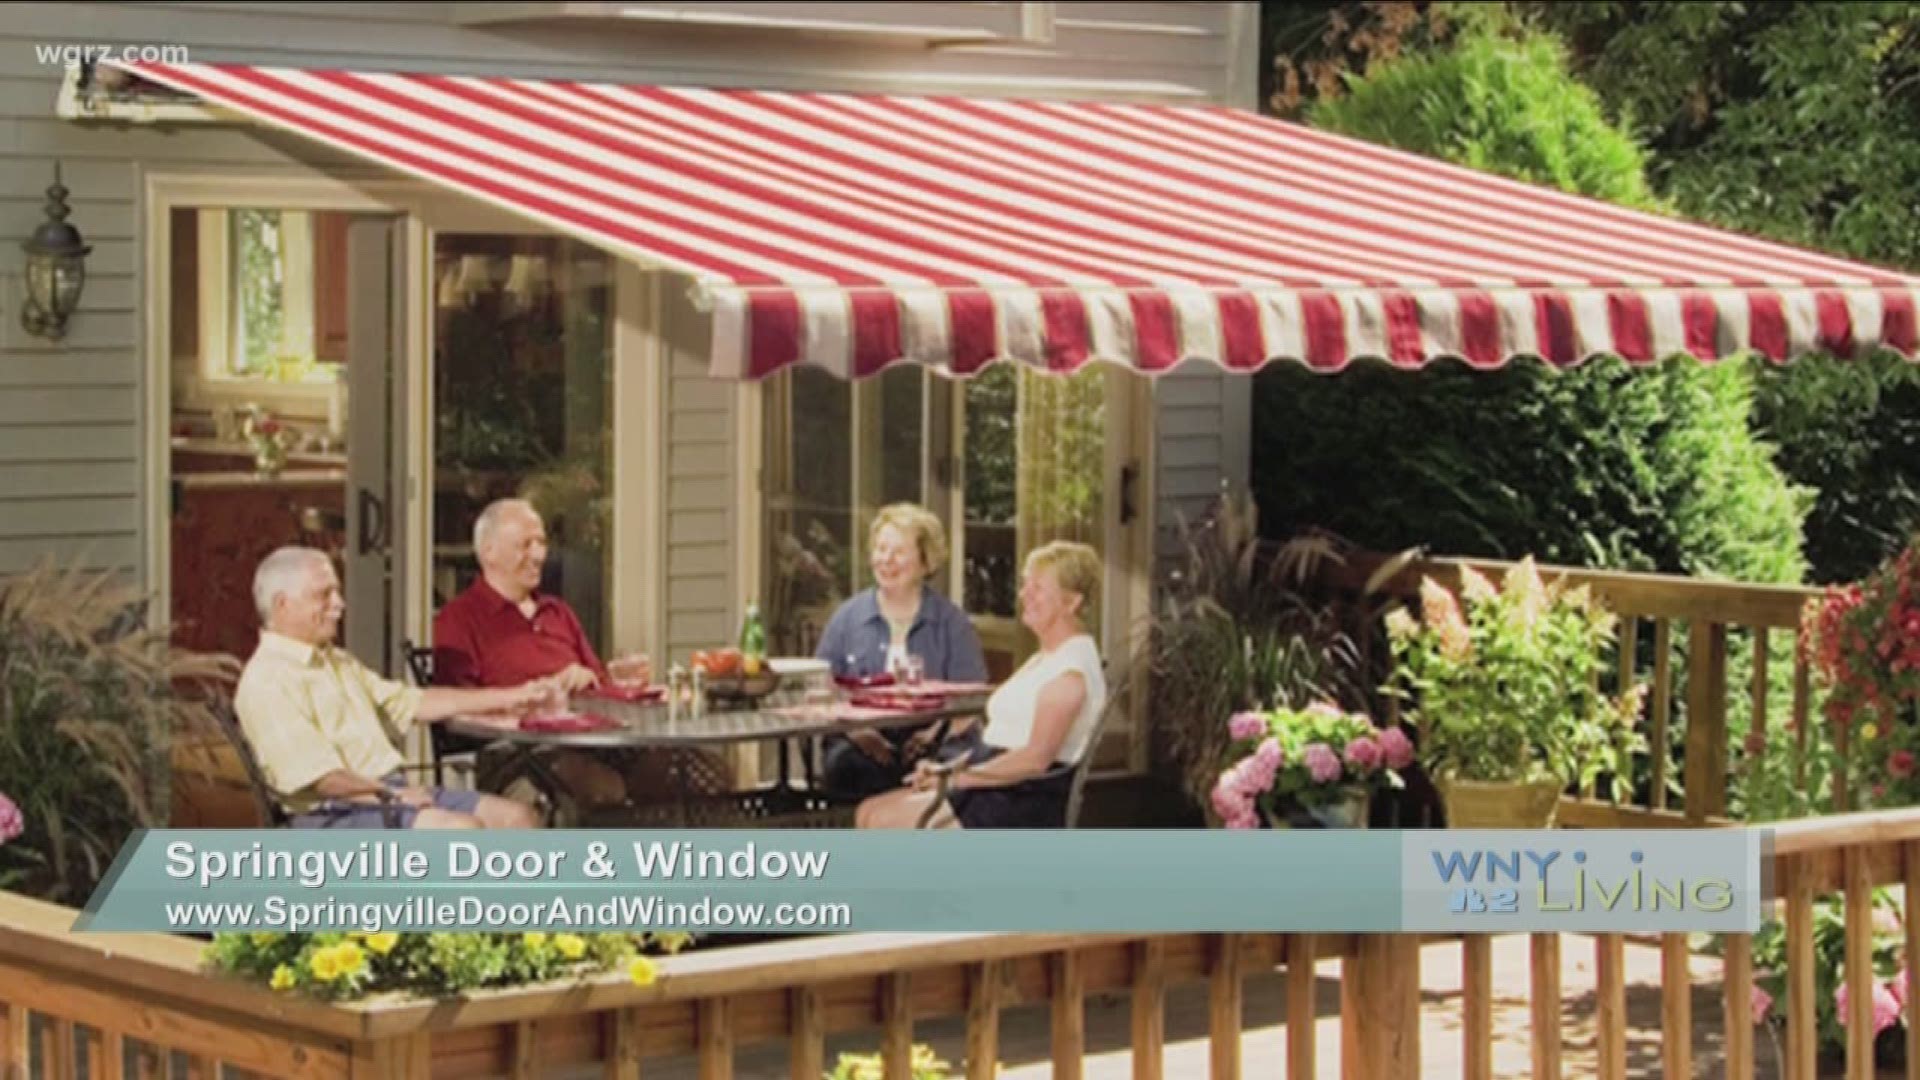 WNY Living - April 13 - Springville Door and Window (SPONSORED CONTENT)